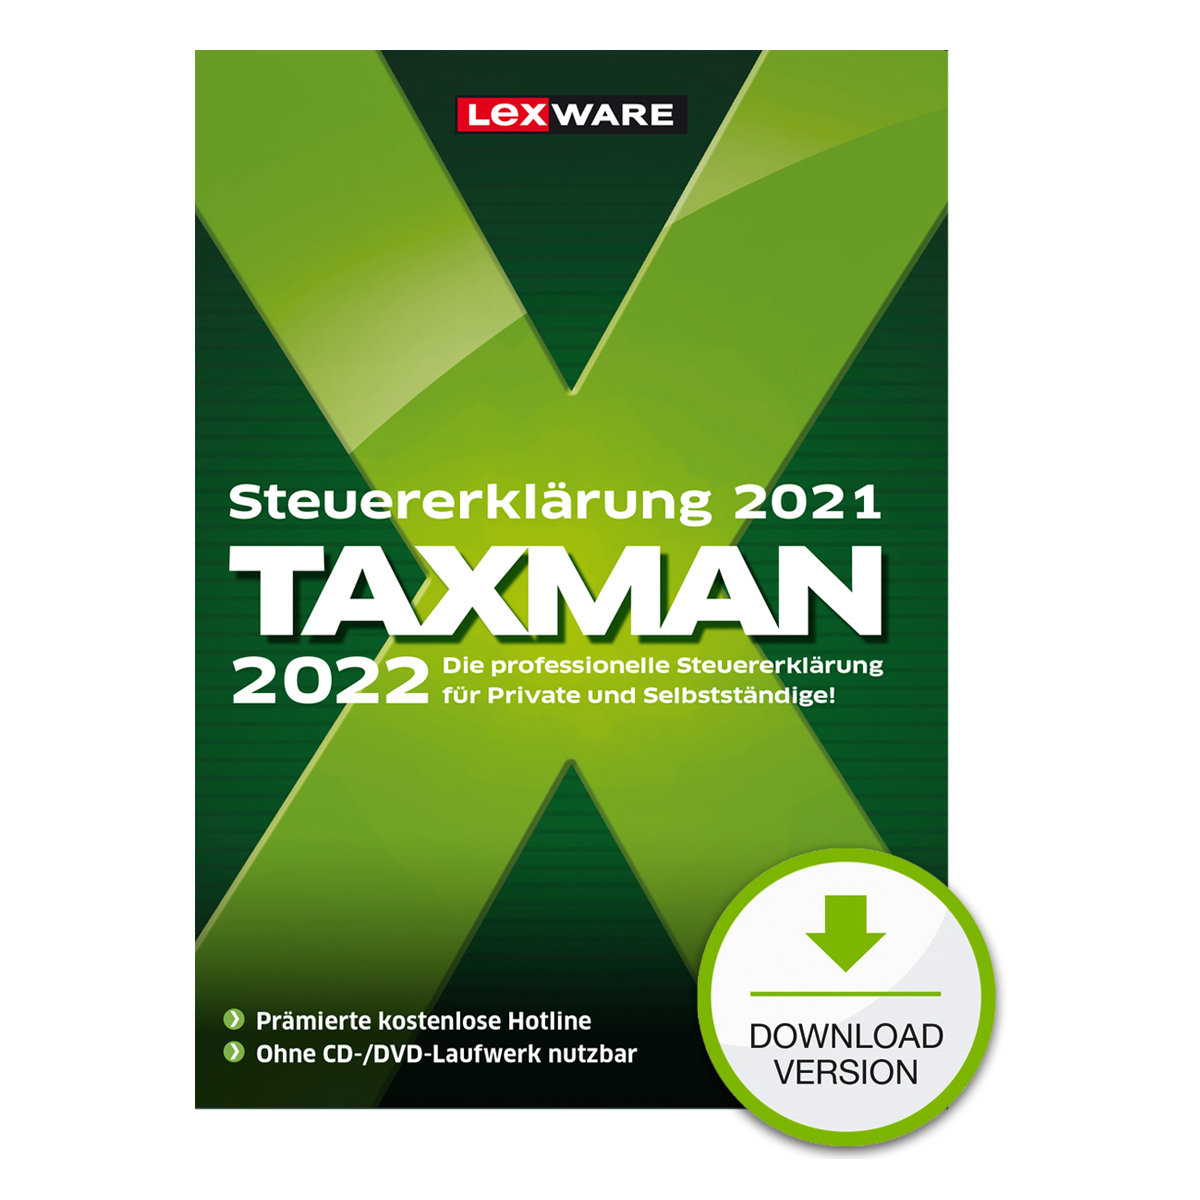 Lexware Taxman 2022 von Lexware